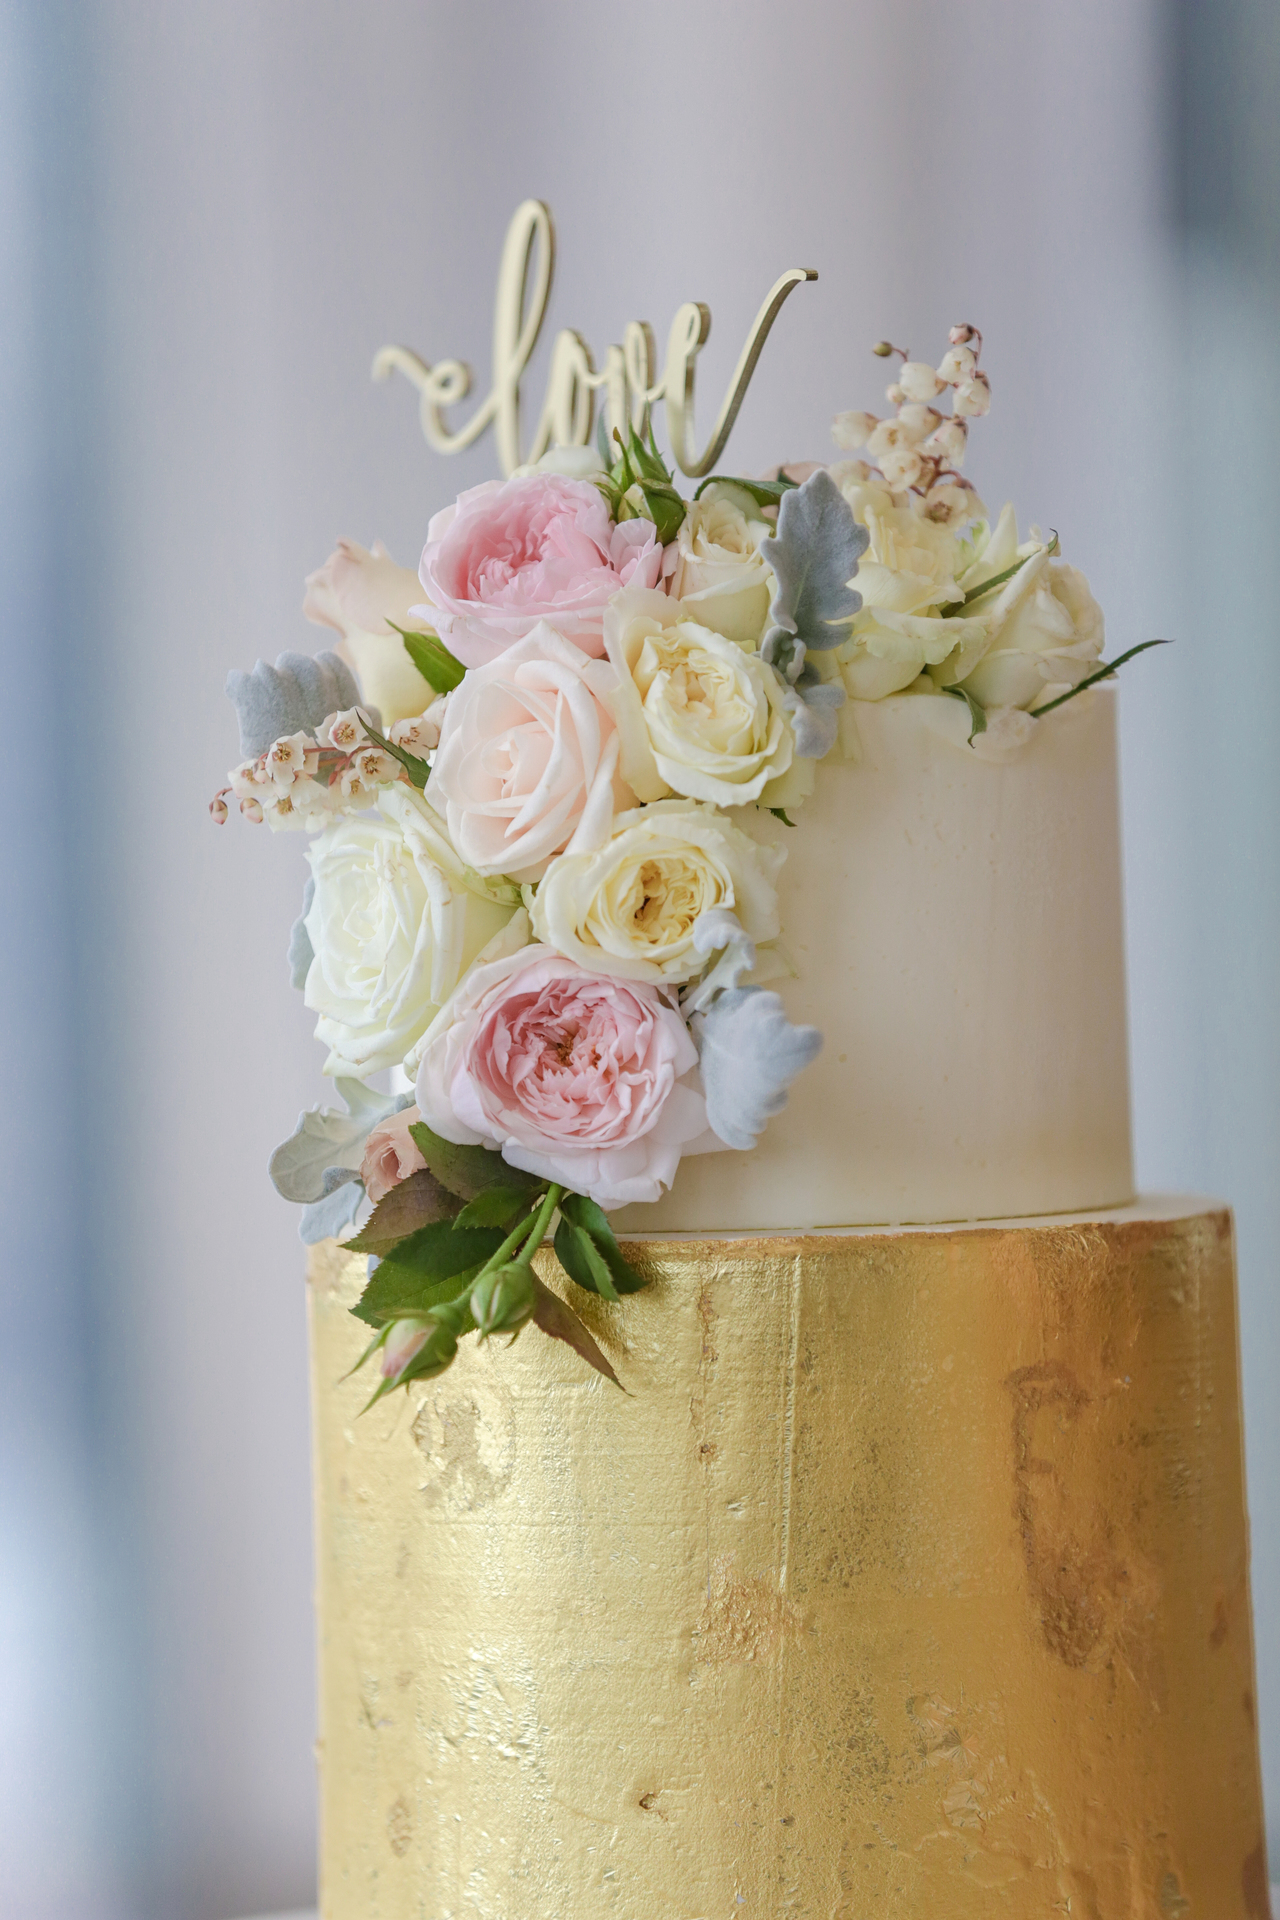 sydney wedding cake with love sign